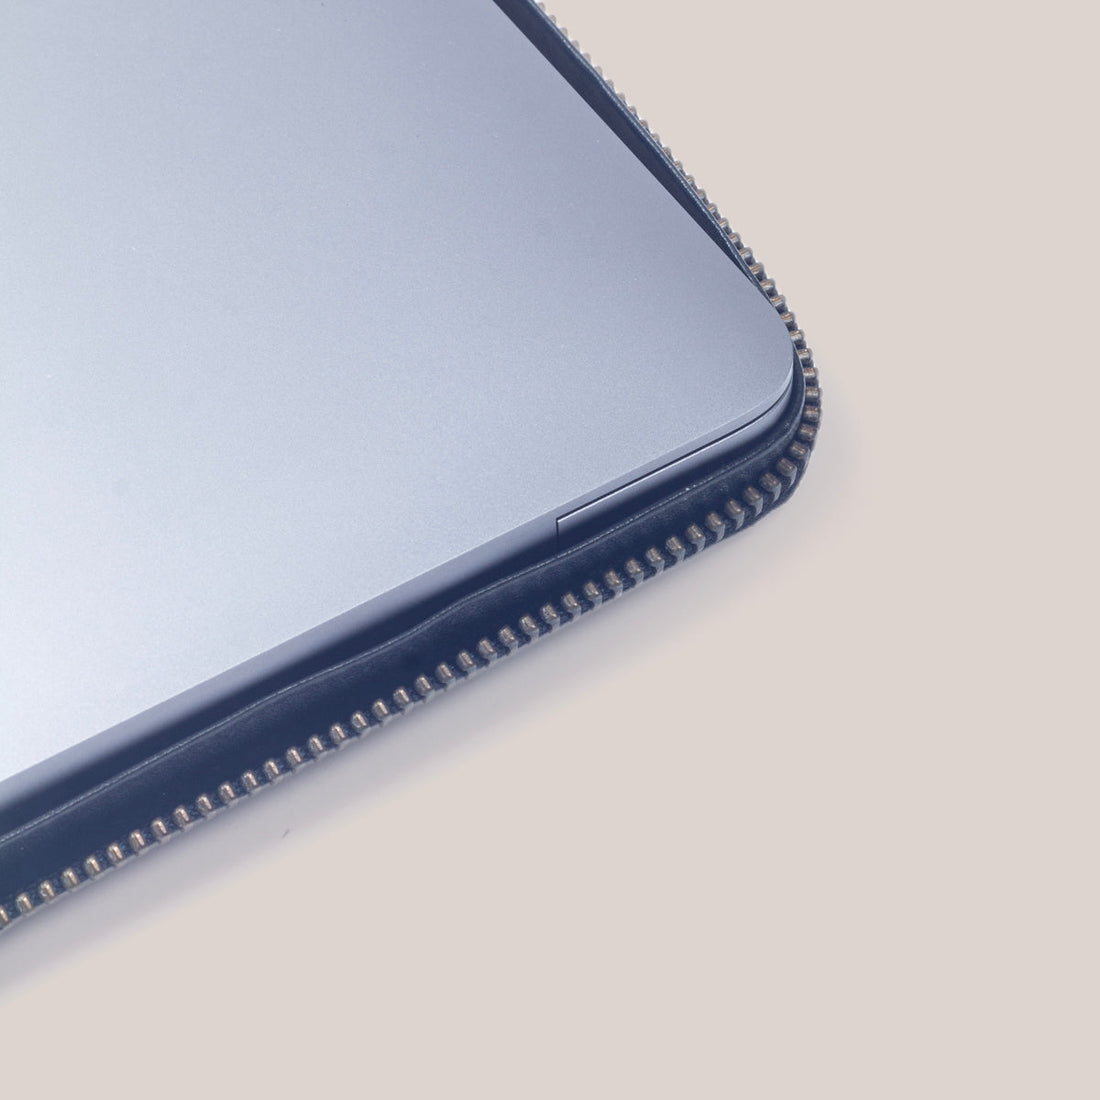 MacBook Pro 14 Zippered Laptop Case - Cognac